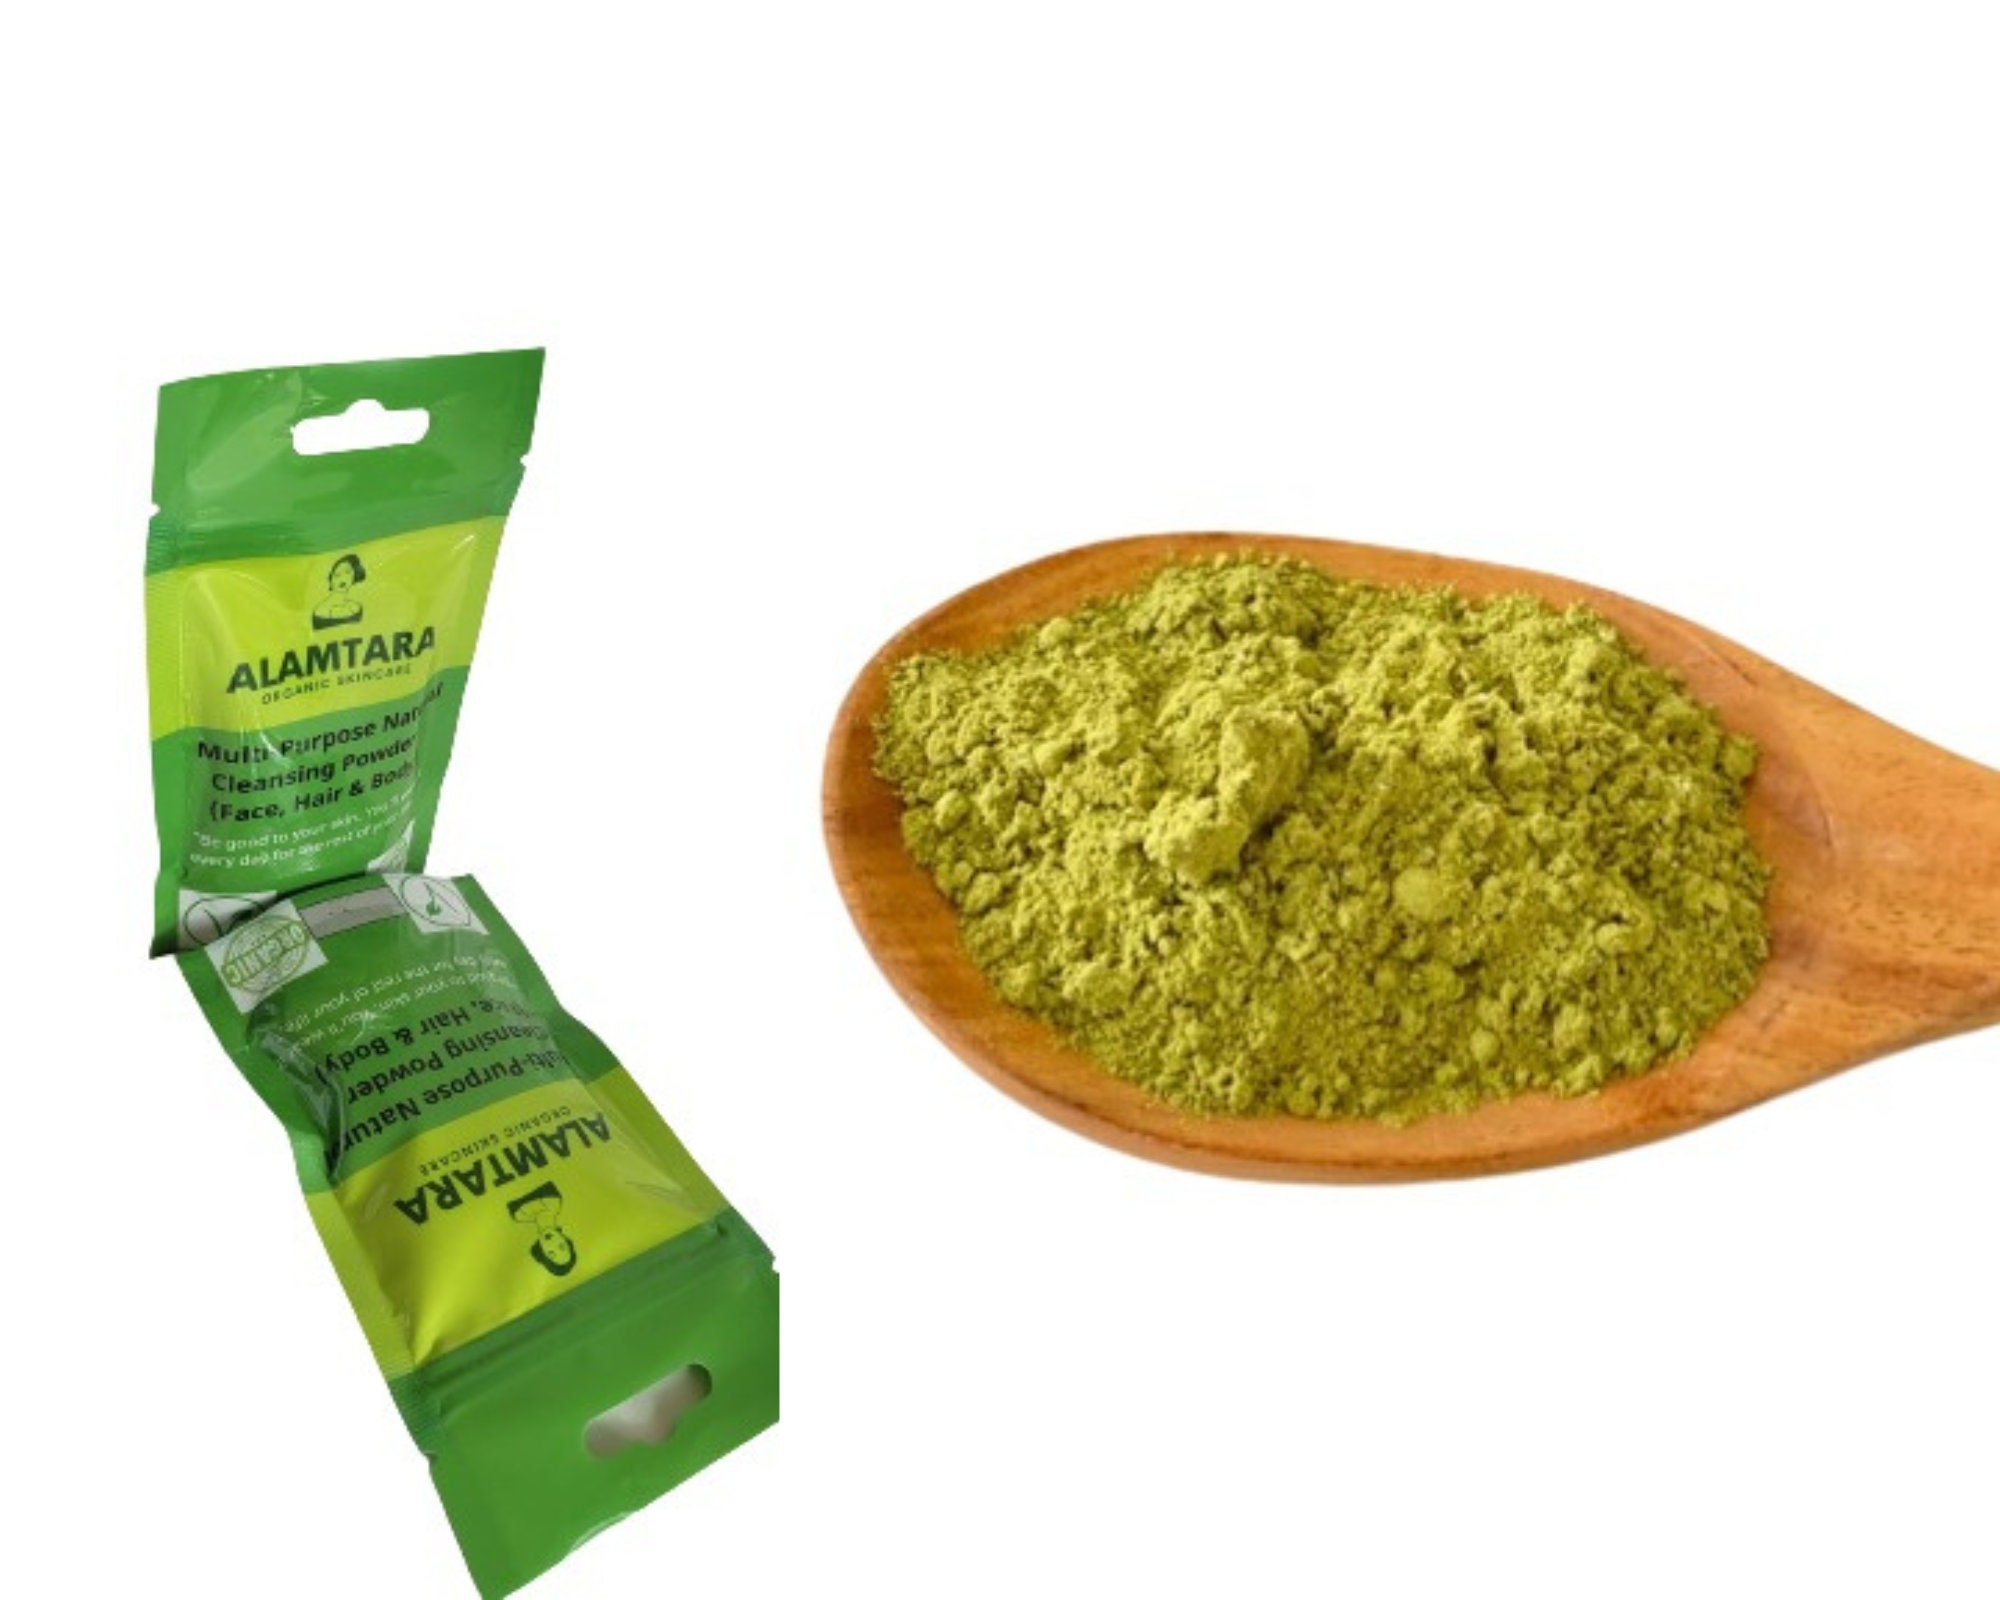 Qasil Powder – Mara Organics